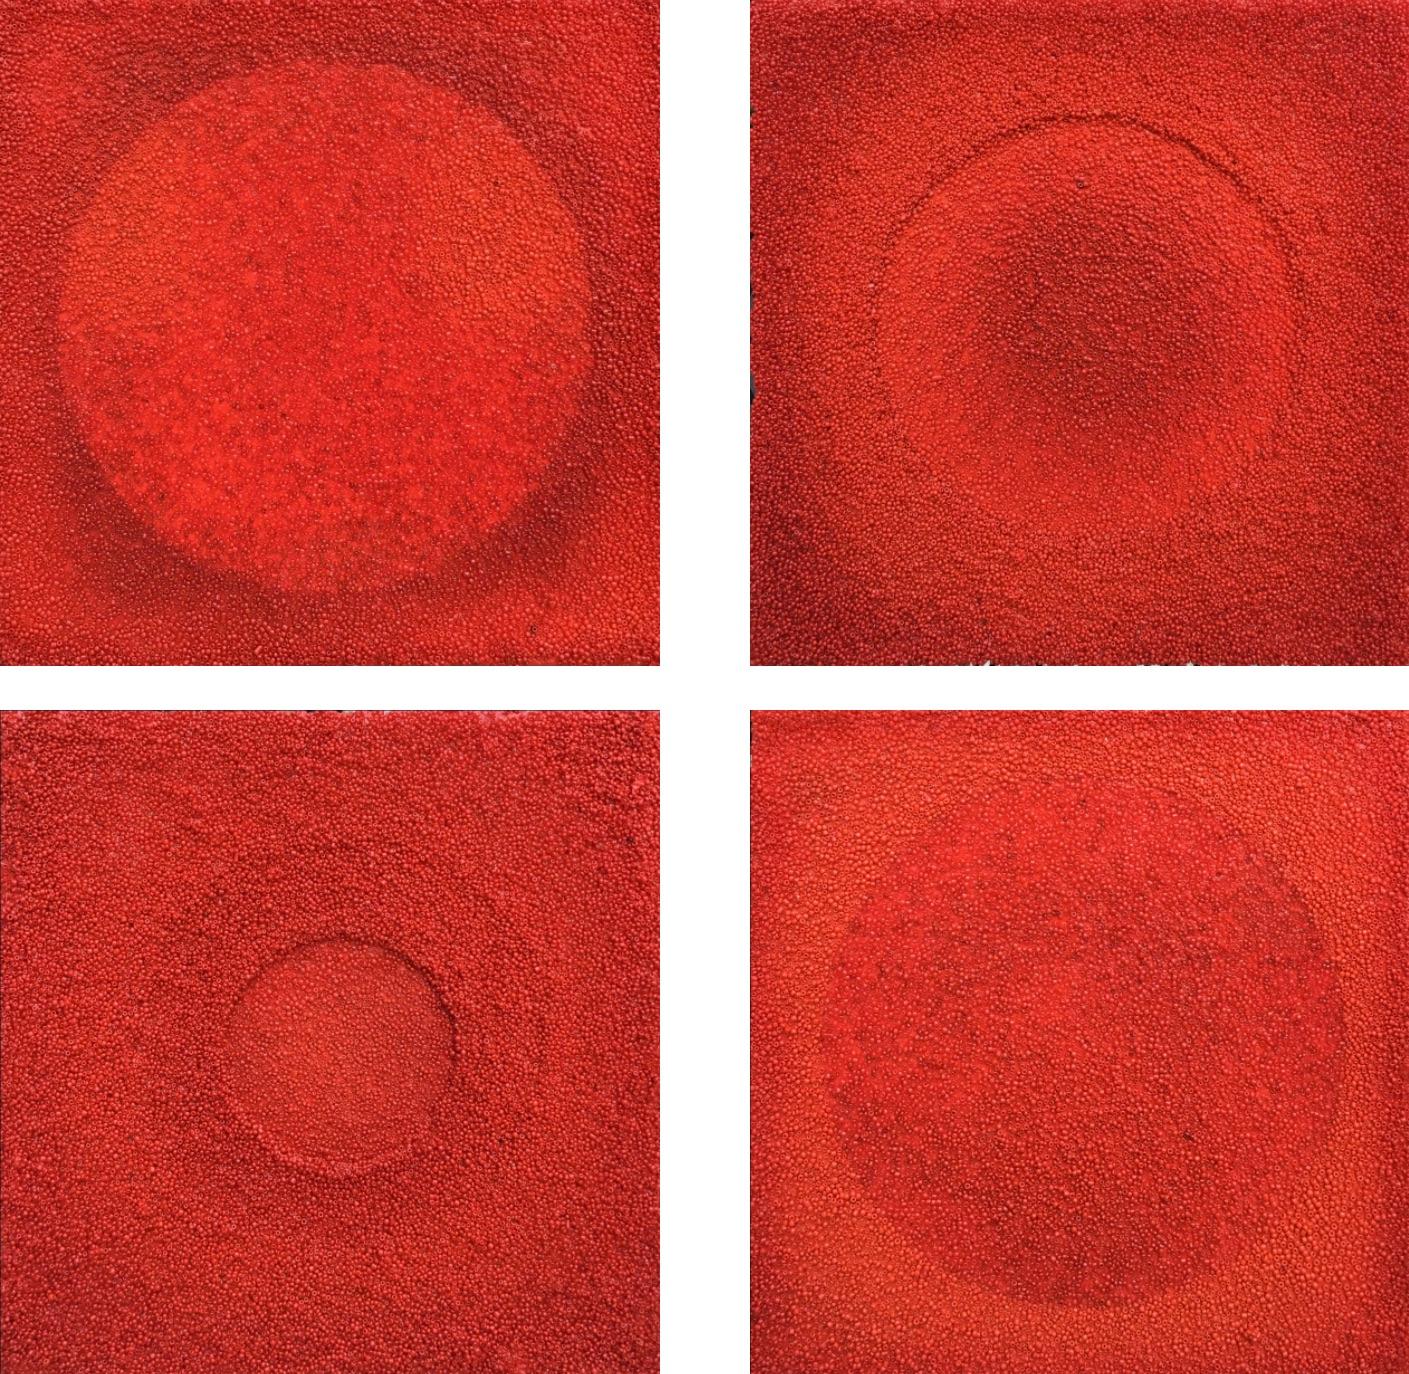 Antonio Puri Abstract Sculpture - Tantra series: suite of 4 red minimalist mandala wall sculptures / paintings